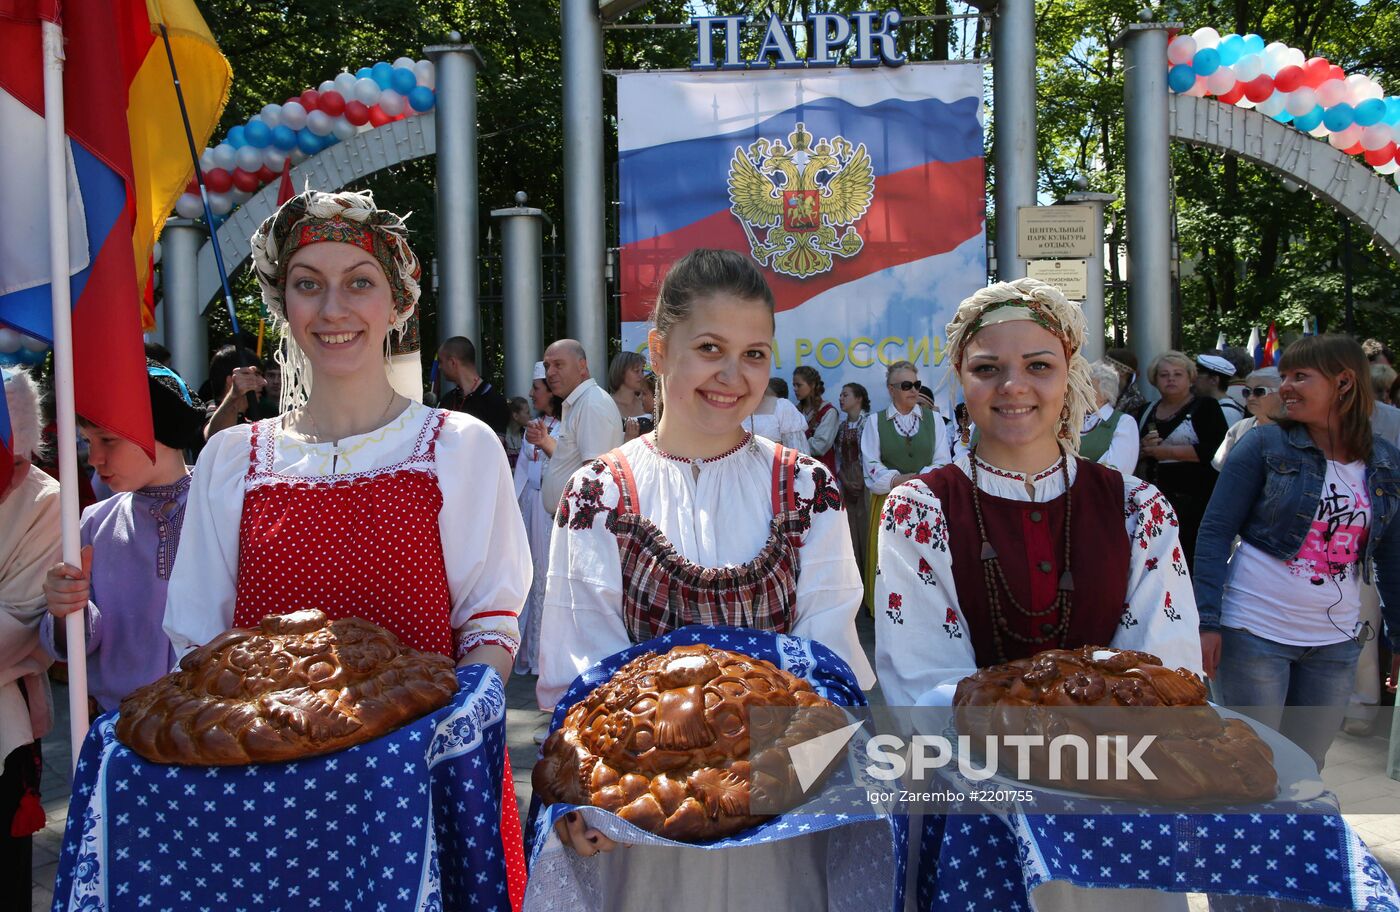 Celebrating Russia Day